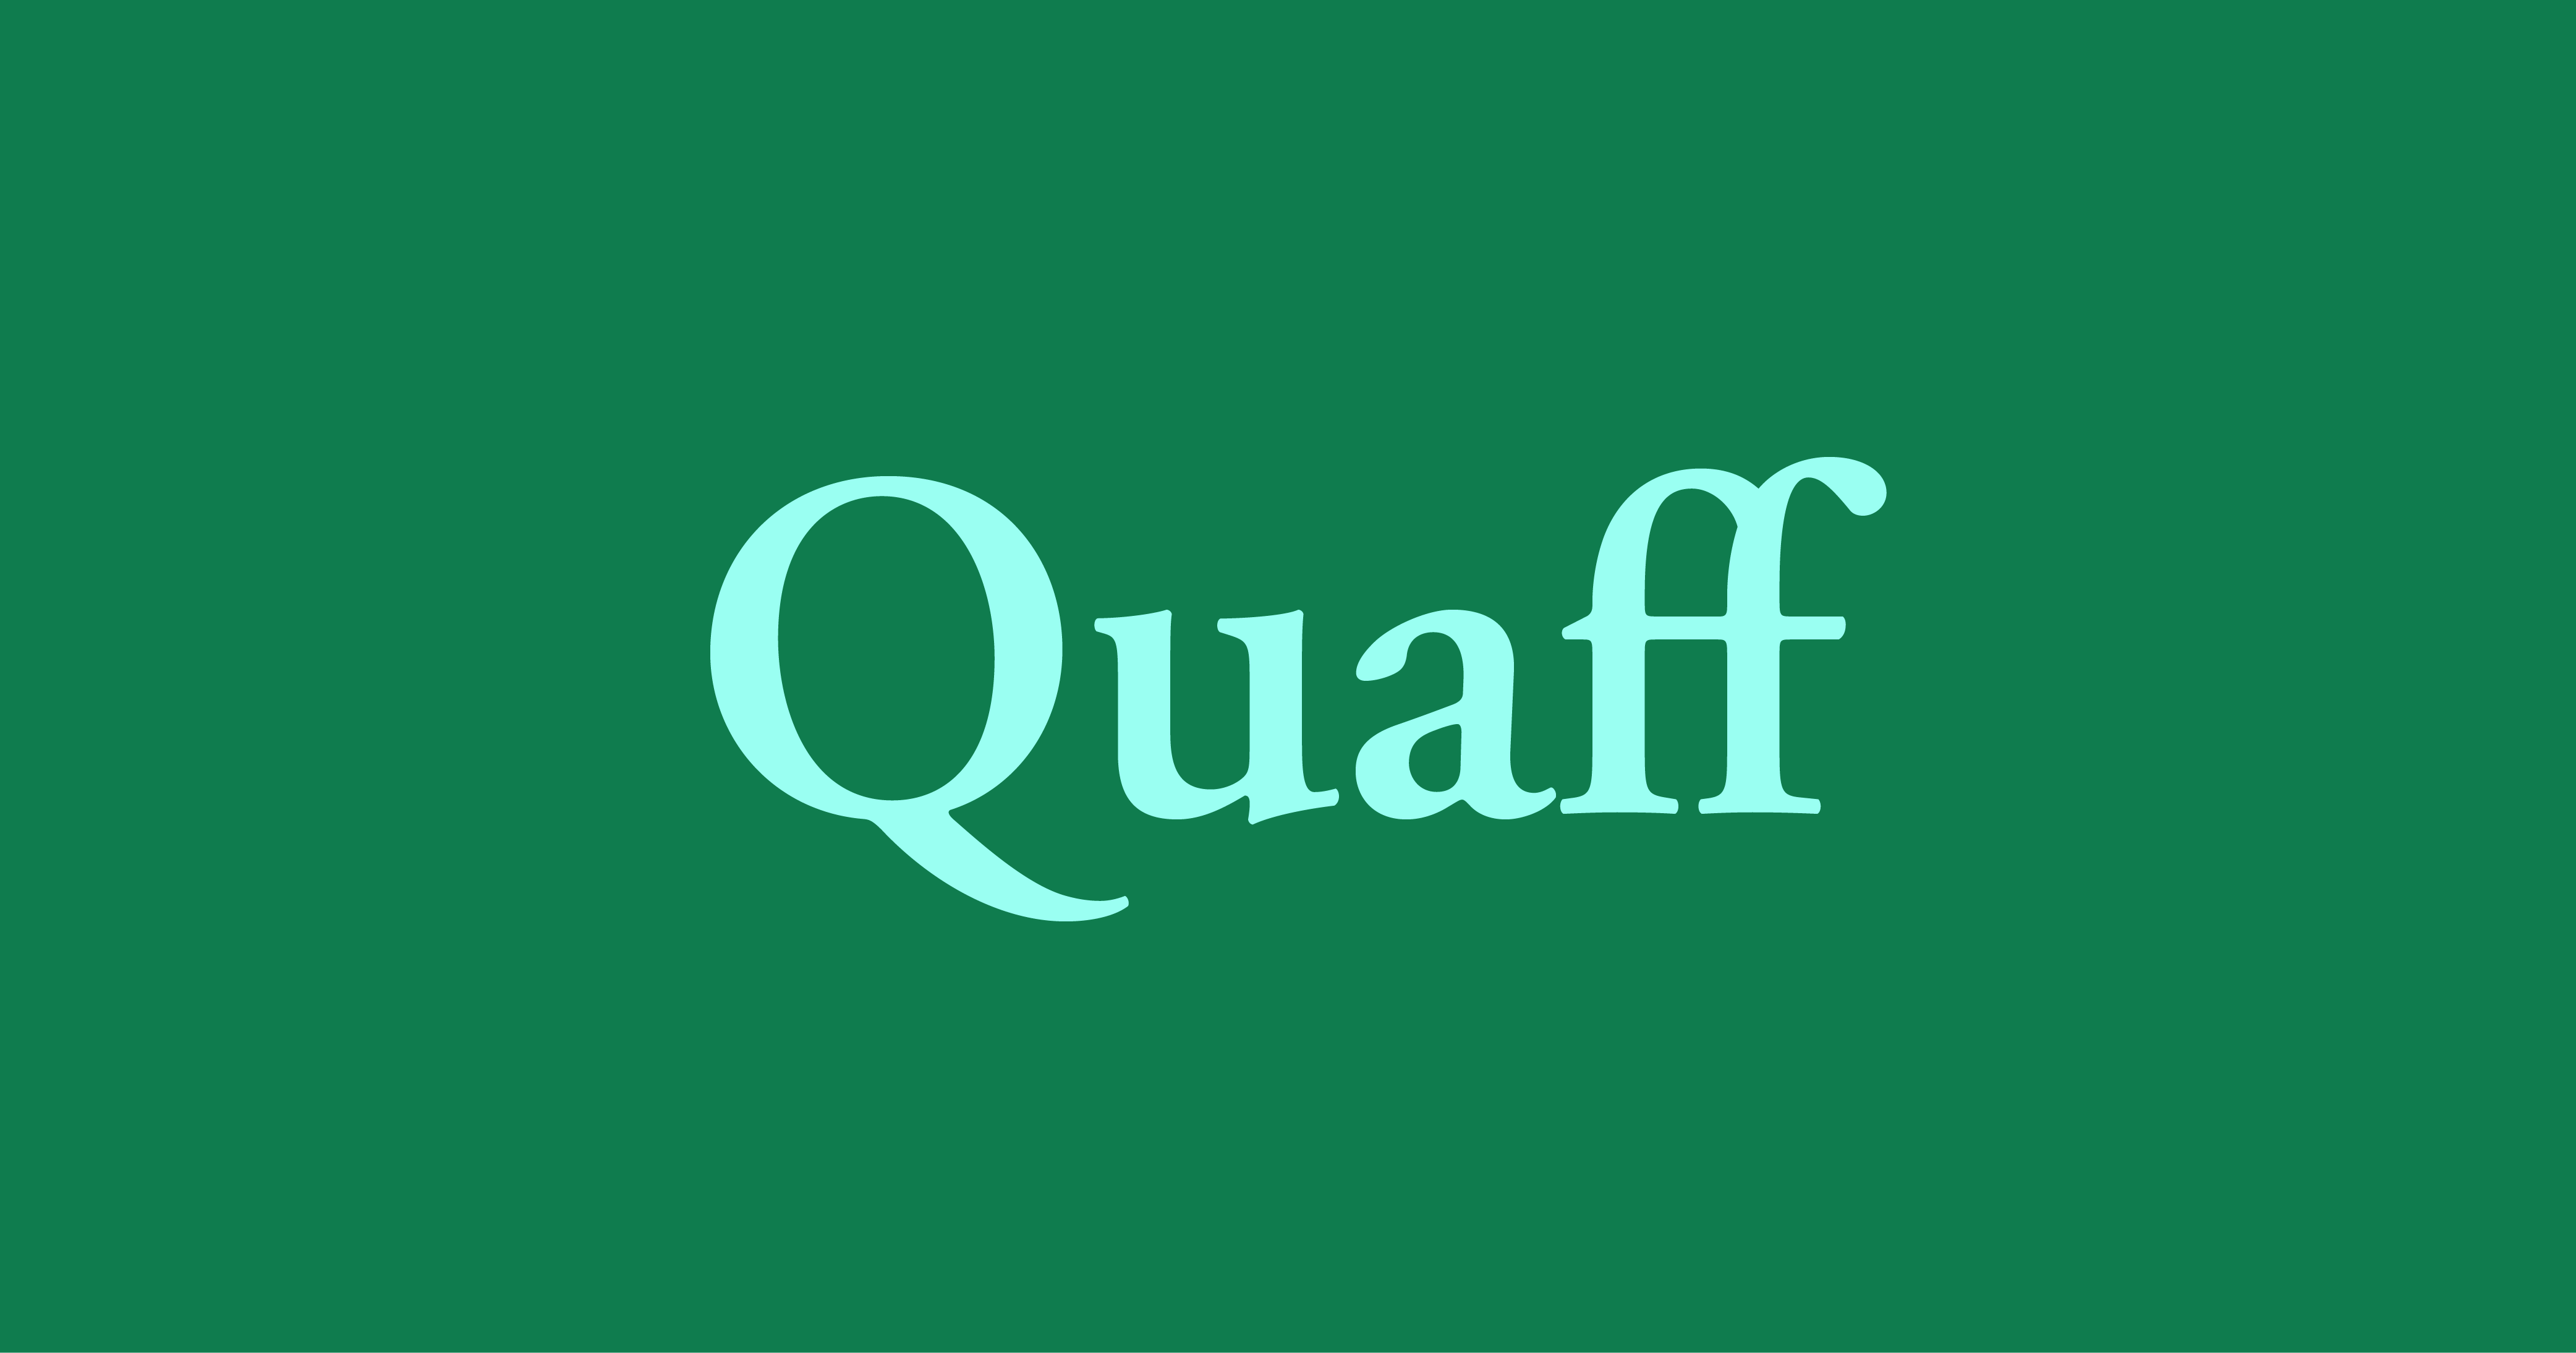 Quaff